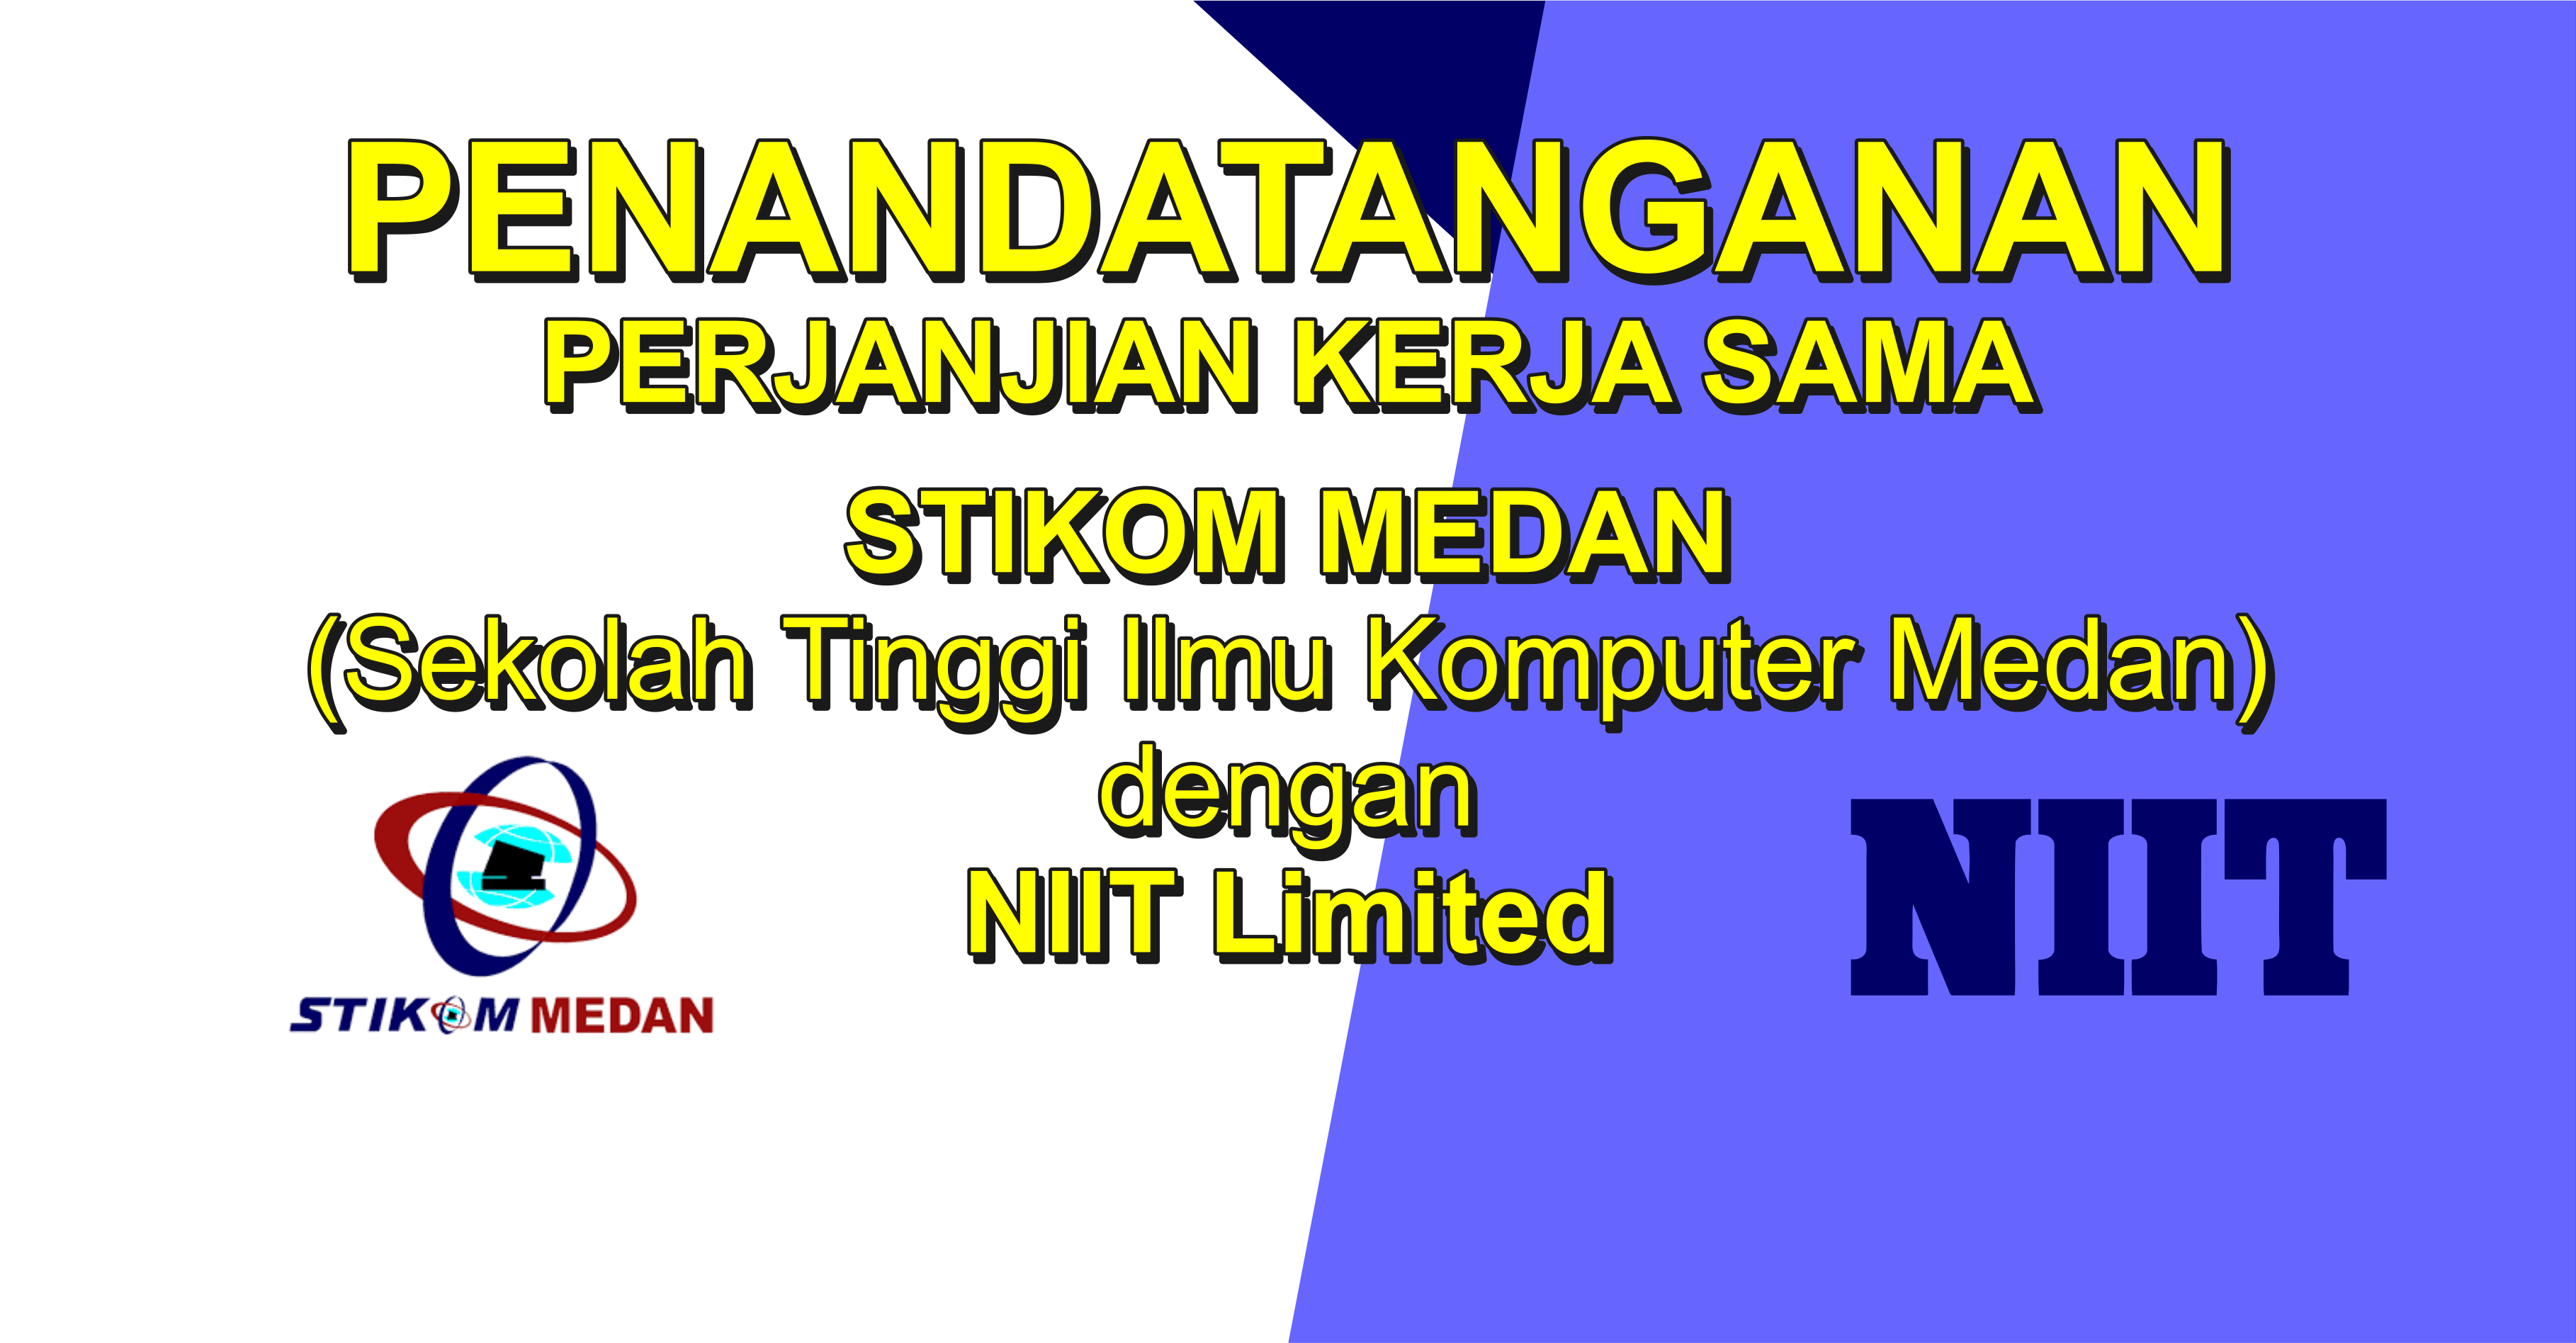 Memorandum of Understanding (MoU) anatar STIKOM Medan dan NIIT Limited 